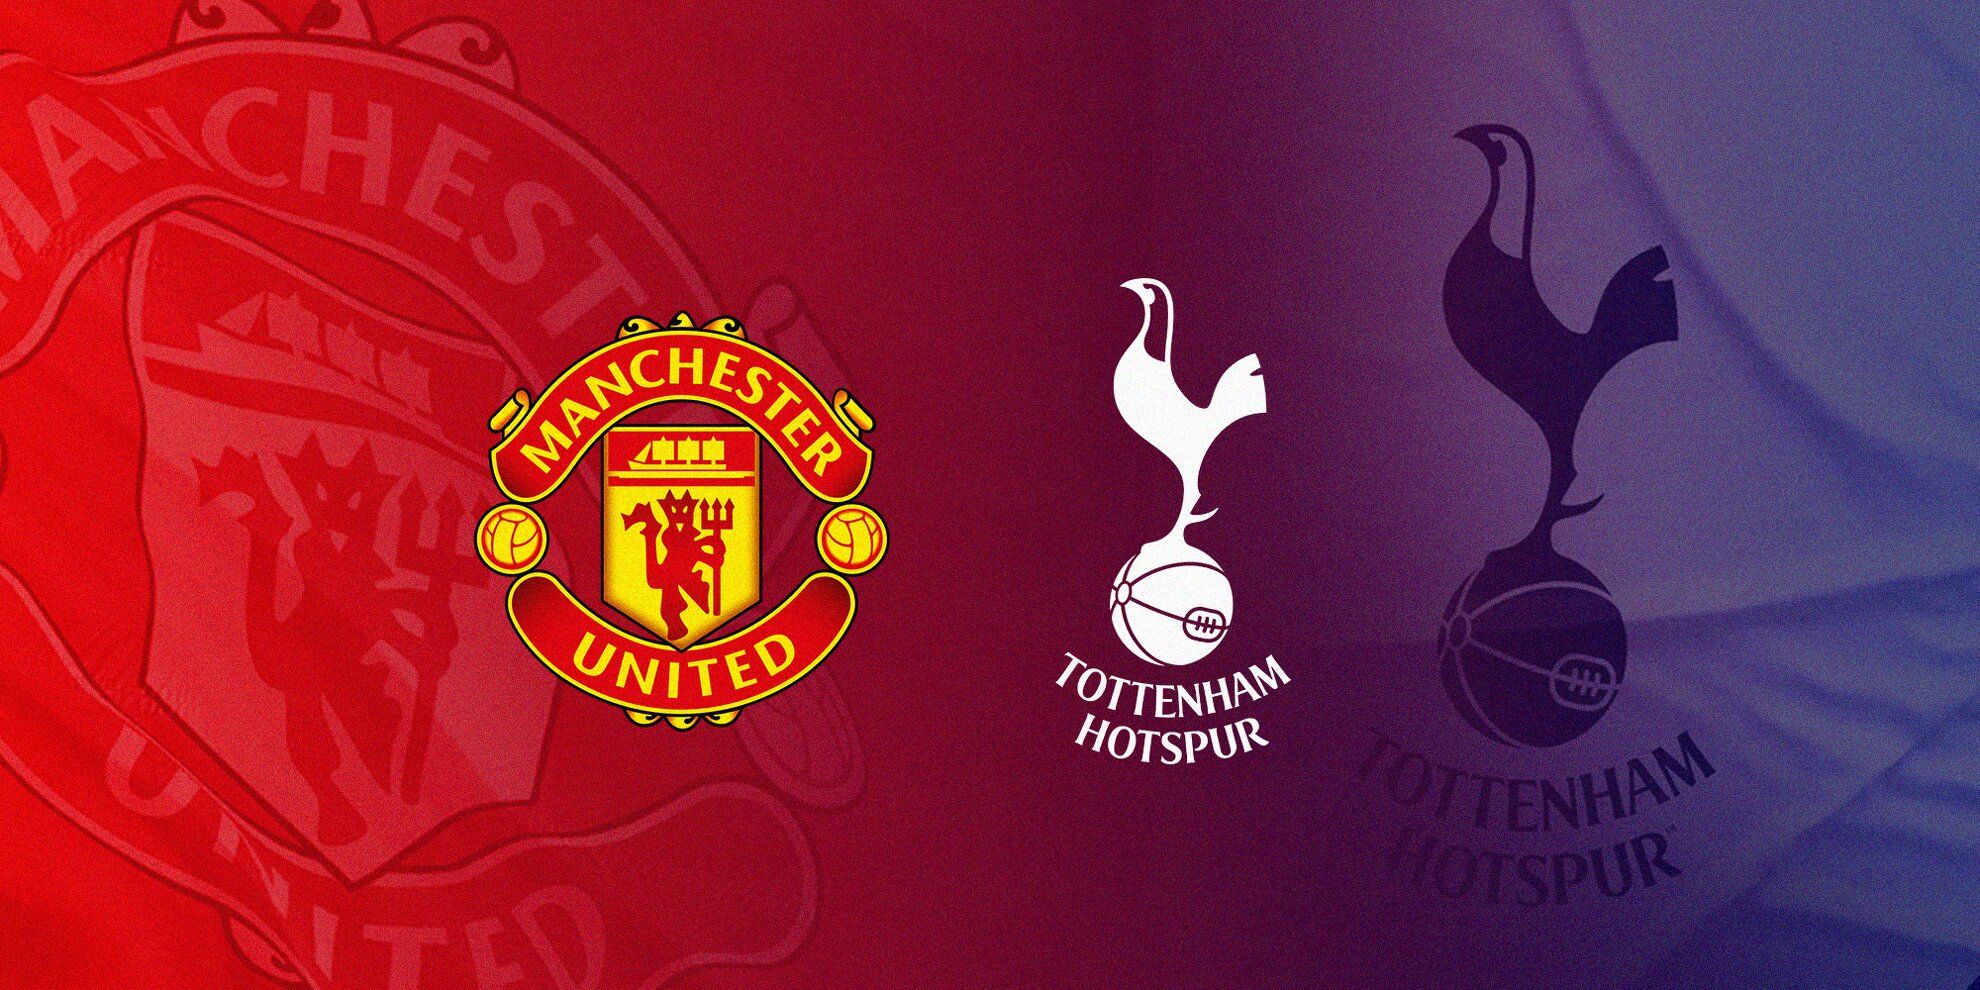 Manchester United vs Tottenham Hotspur: Head-to-Head record